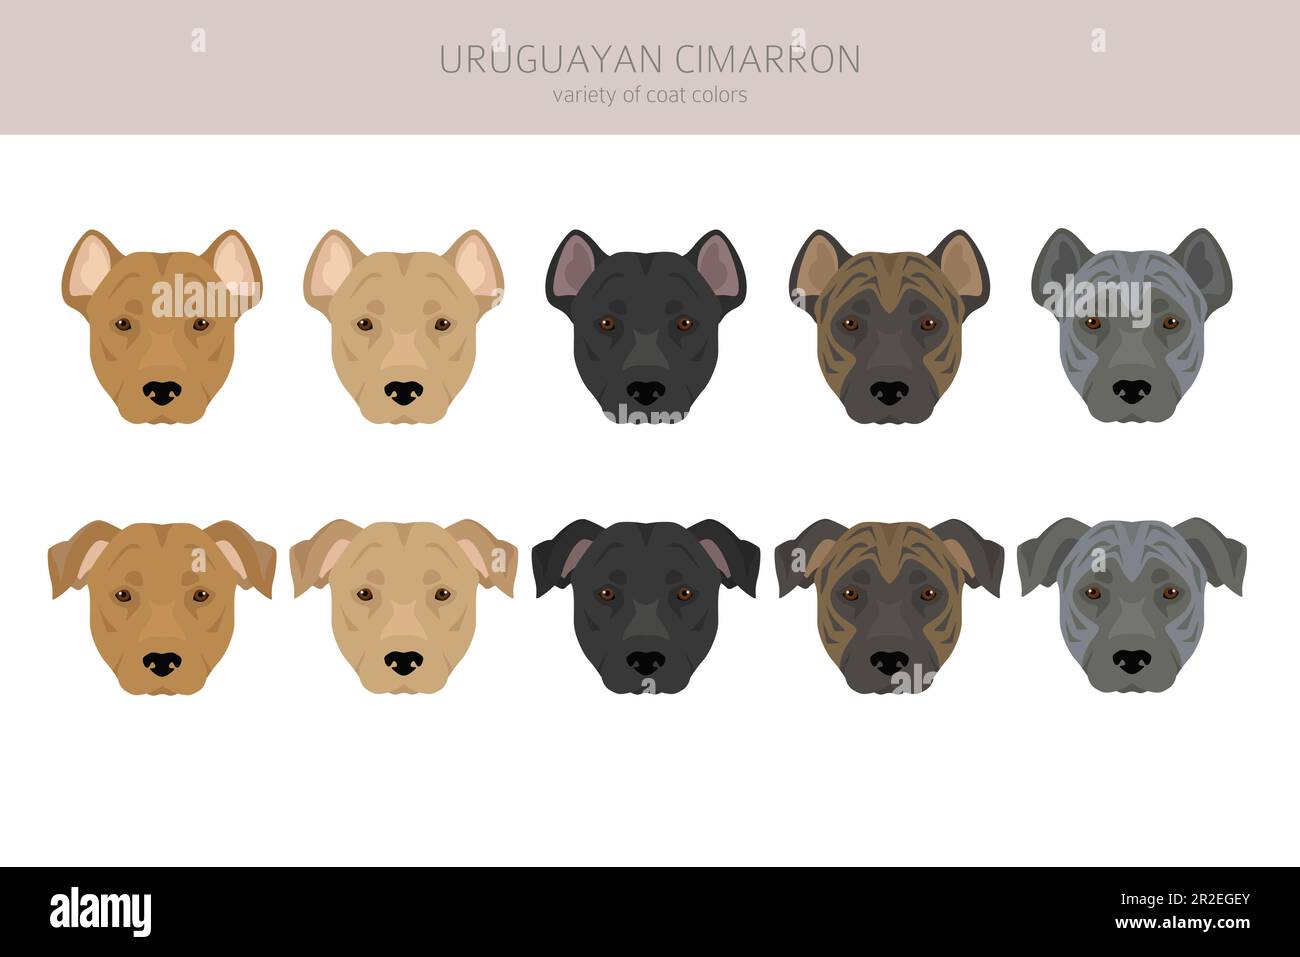 Uruguayan Cimarron clipart. All coat colors set.  All dog breeds characteristics infographic. Vector illustration Stock Vector